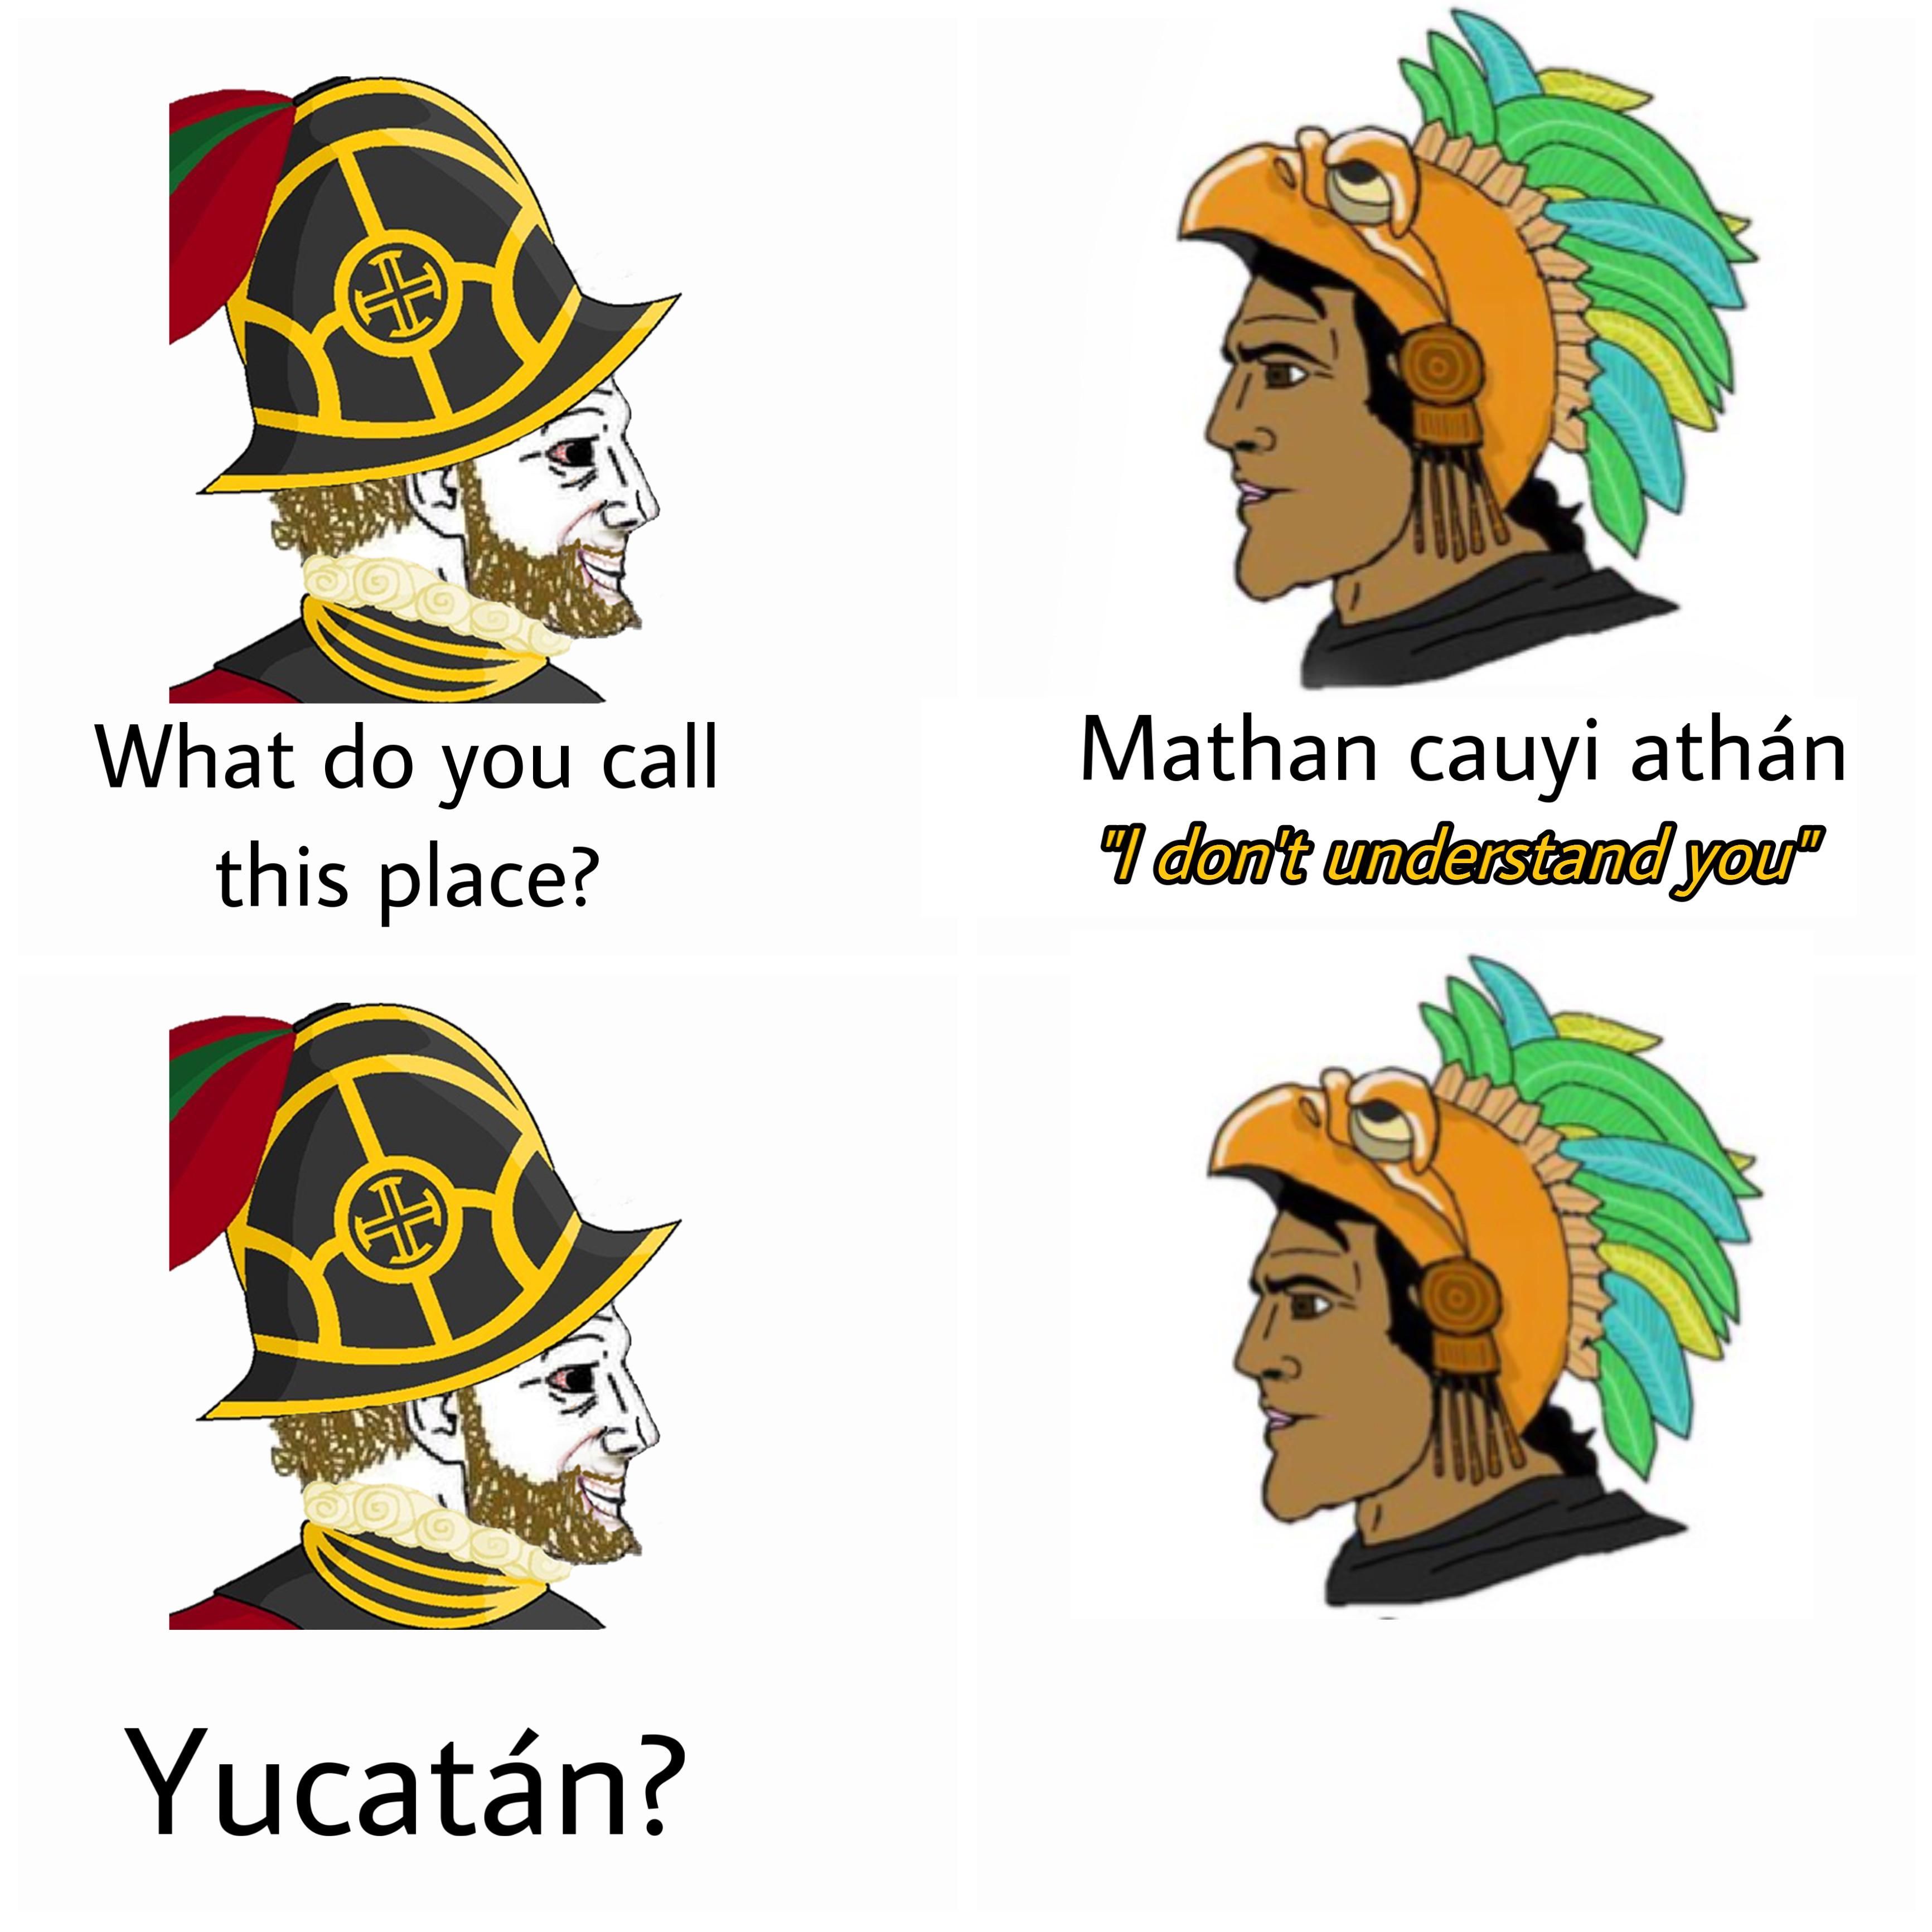 How the Spaniards named the Yucatán peninsula